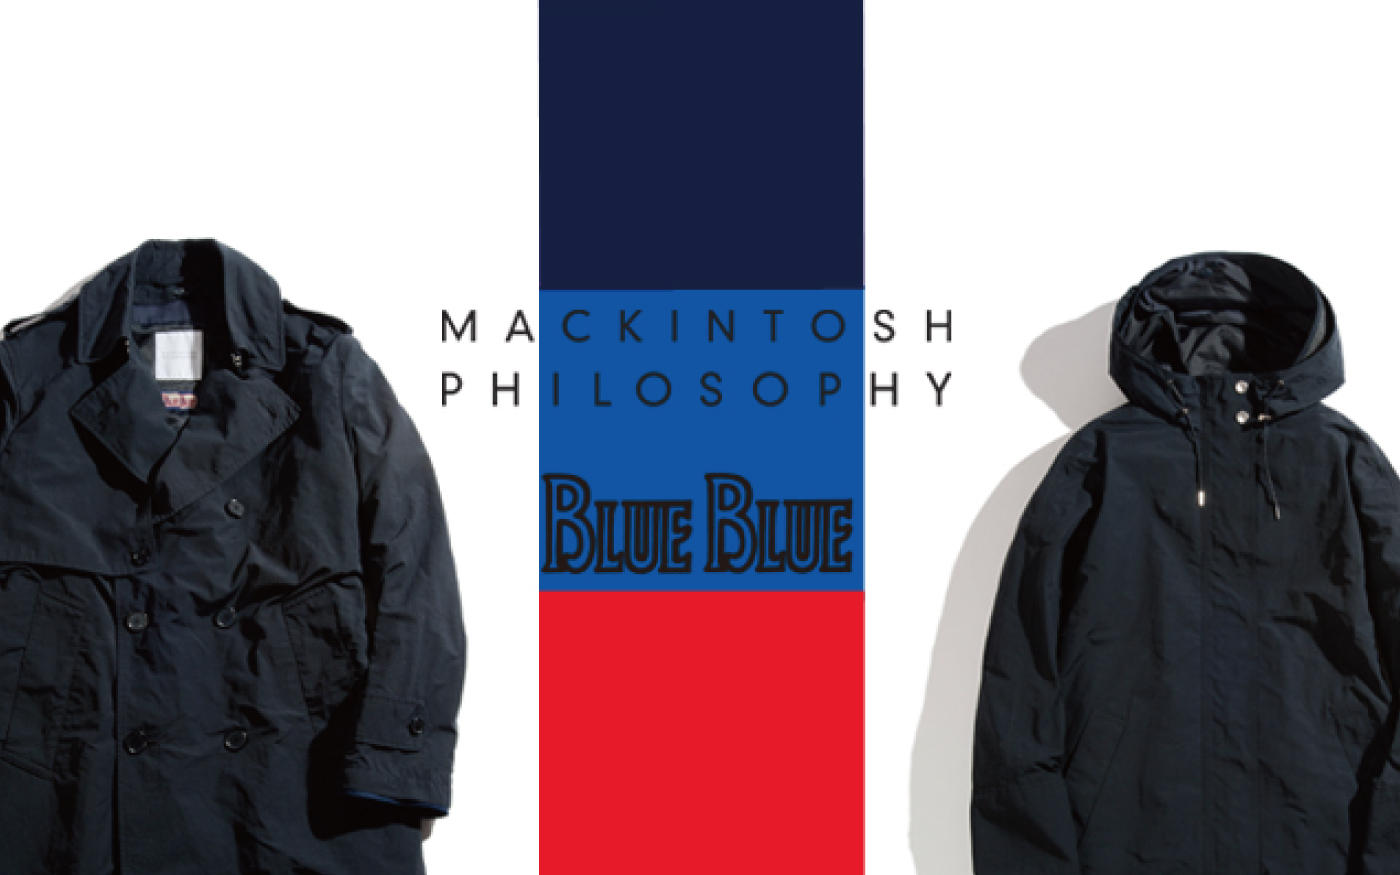 MACKINTOSH PHILOSOPHYと||BLUE BLUE||コラボアイテム登場